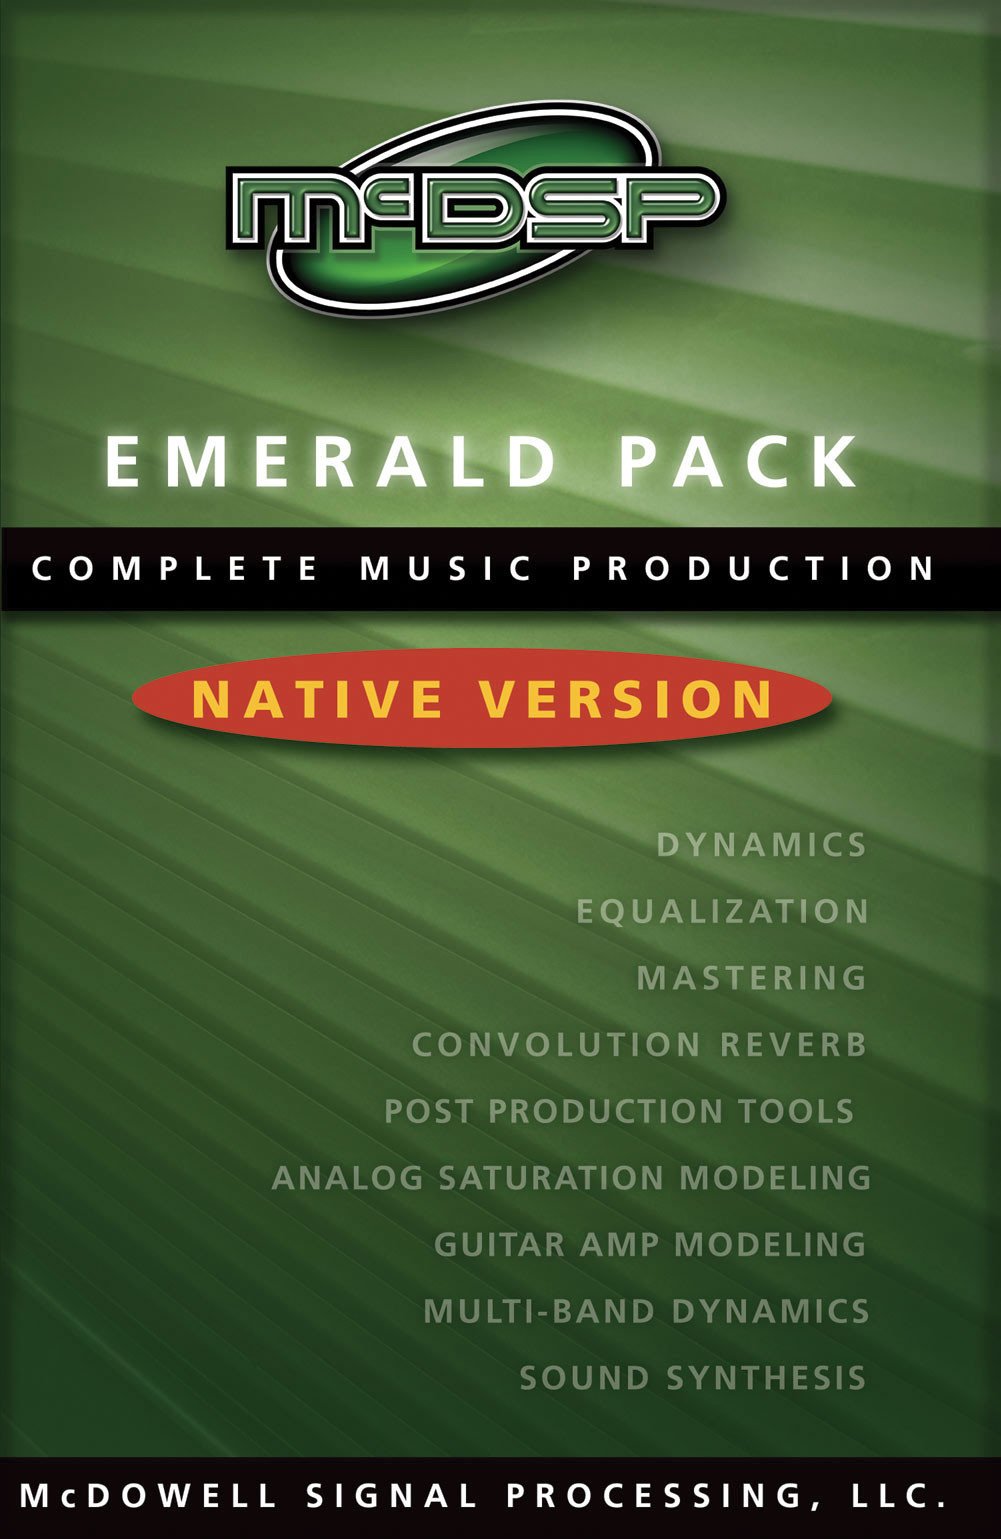 mcdsp emerald pack